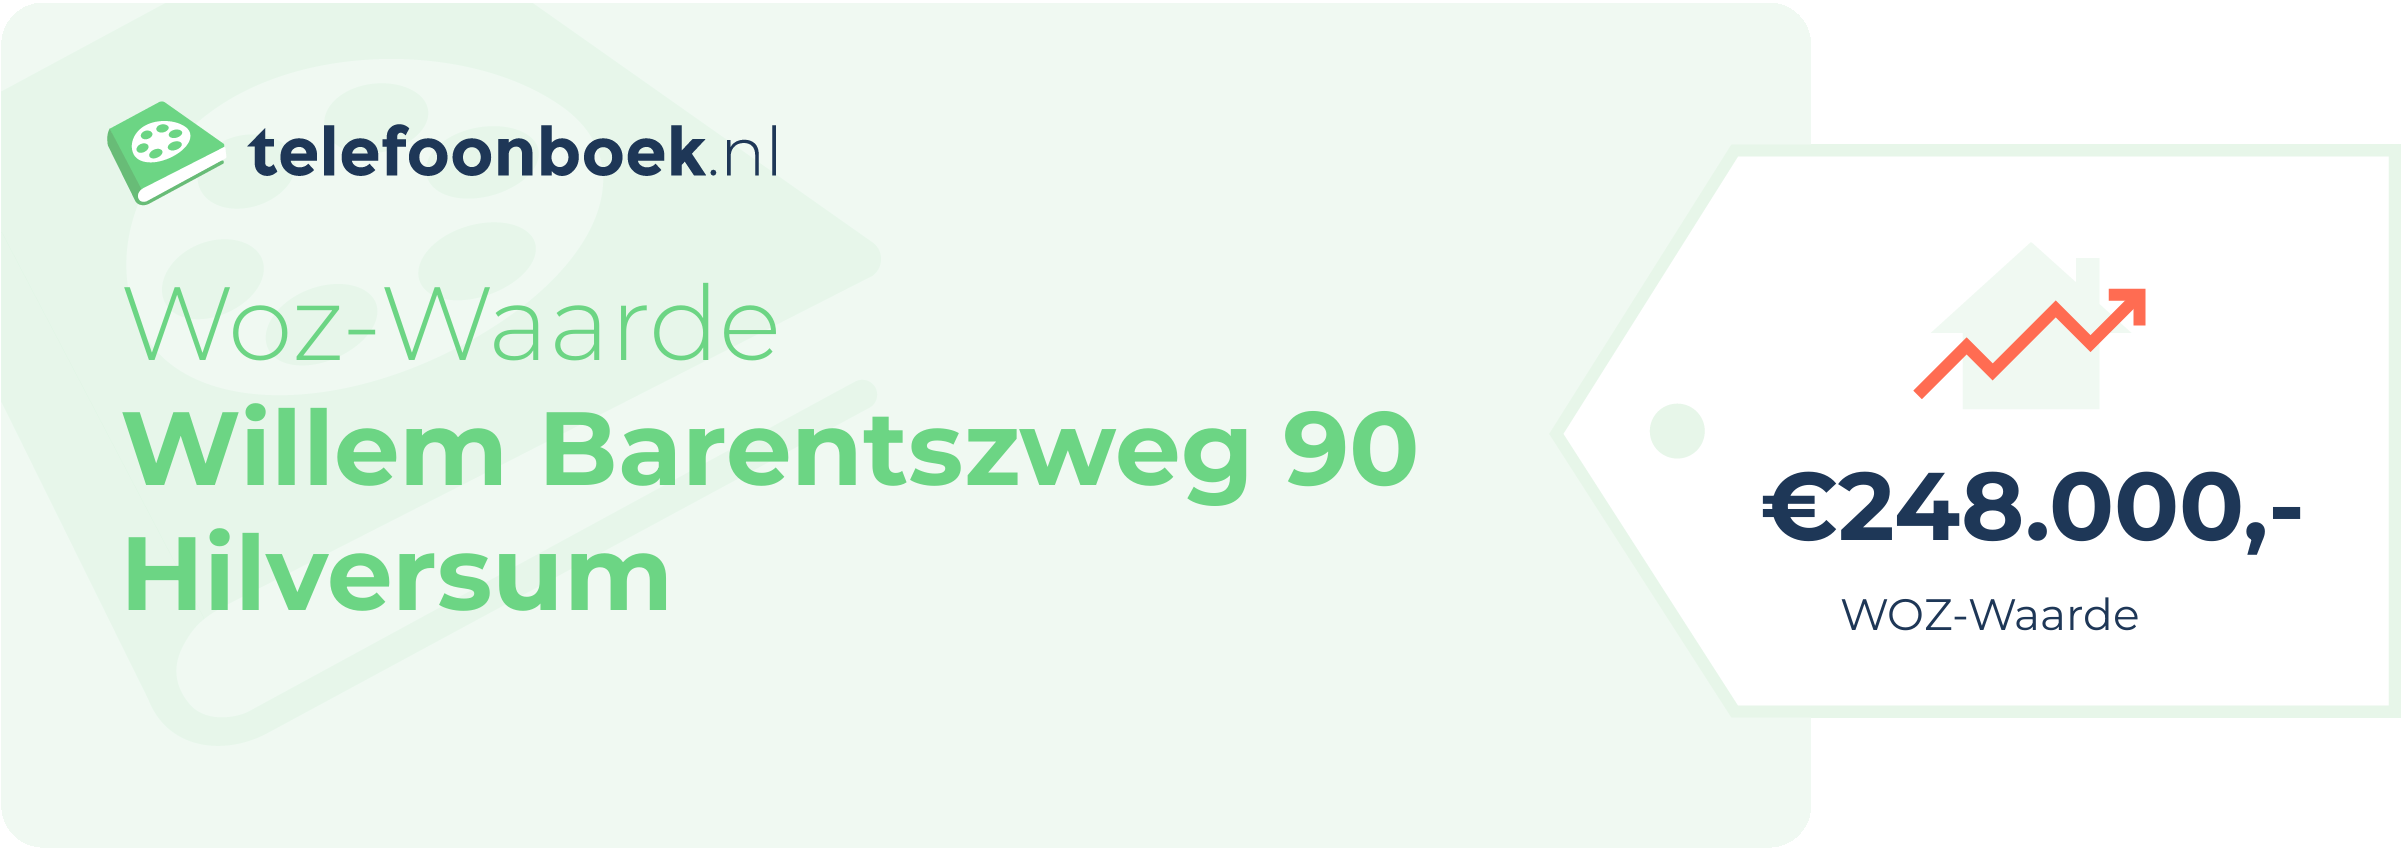 WOZ-waarde Willem Barentszweg 90 Hilversum